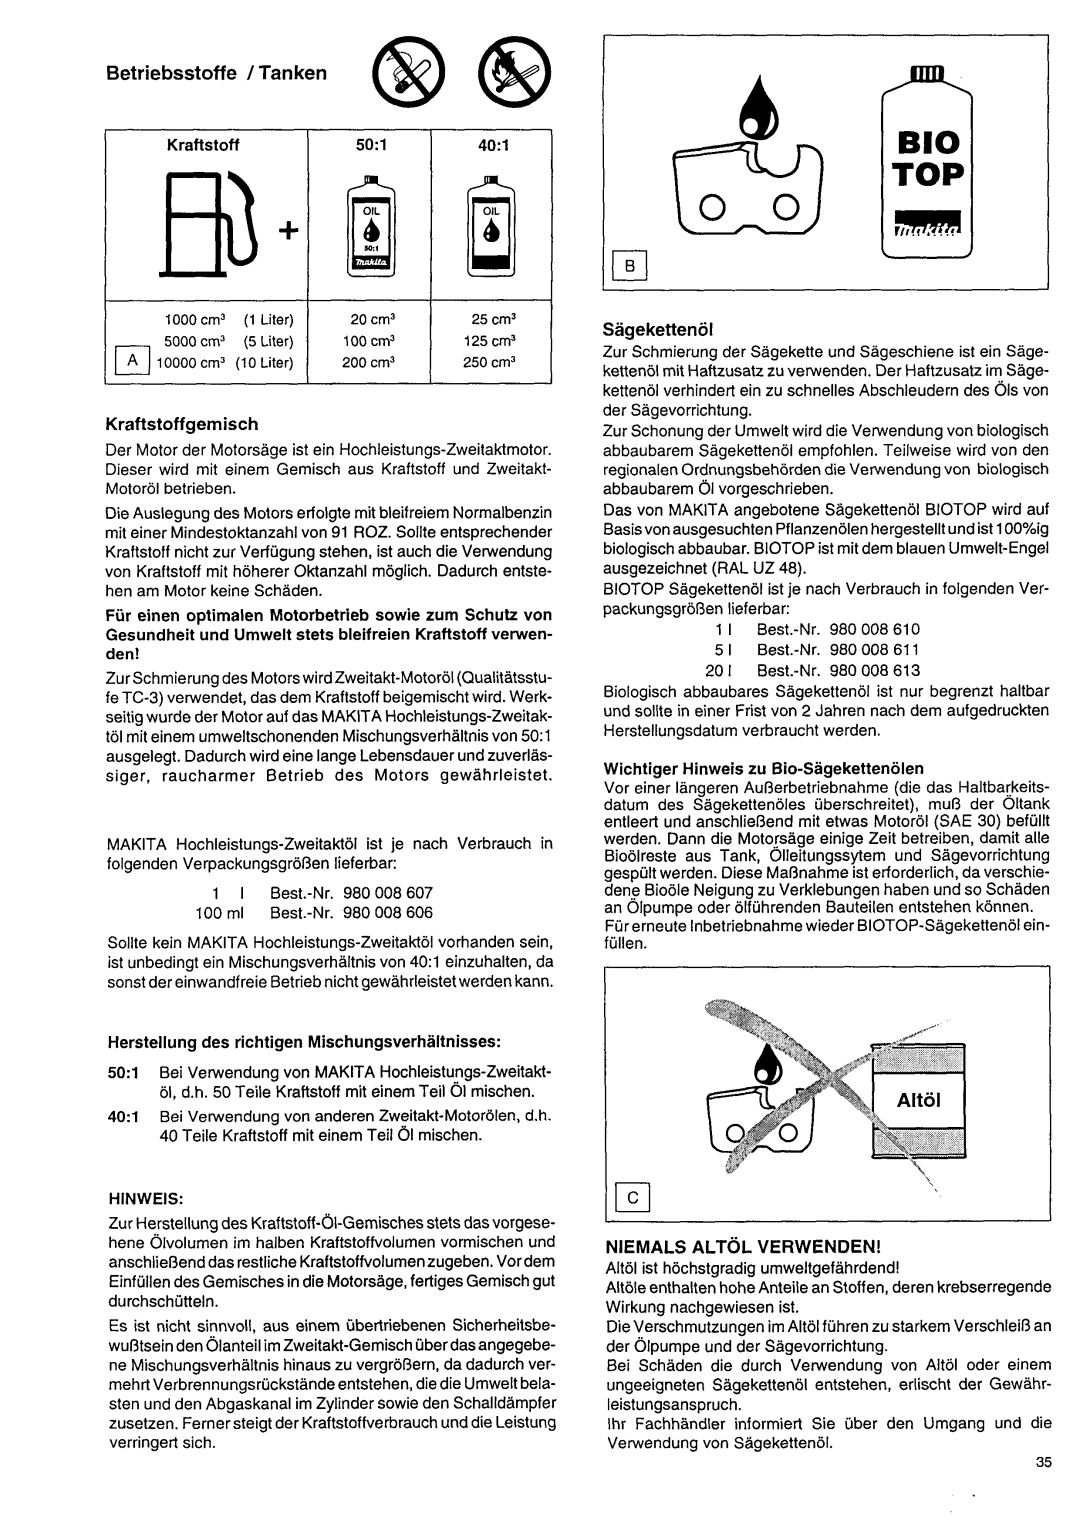 Makita DCS 9000 manual Betriebsstoffe / Tanken @ @, Niemals Altol Verwenden, Sagekettenol, 83.@ fiJ, 20 cm3 